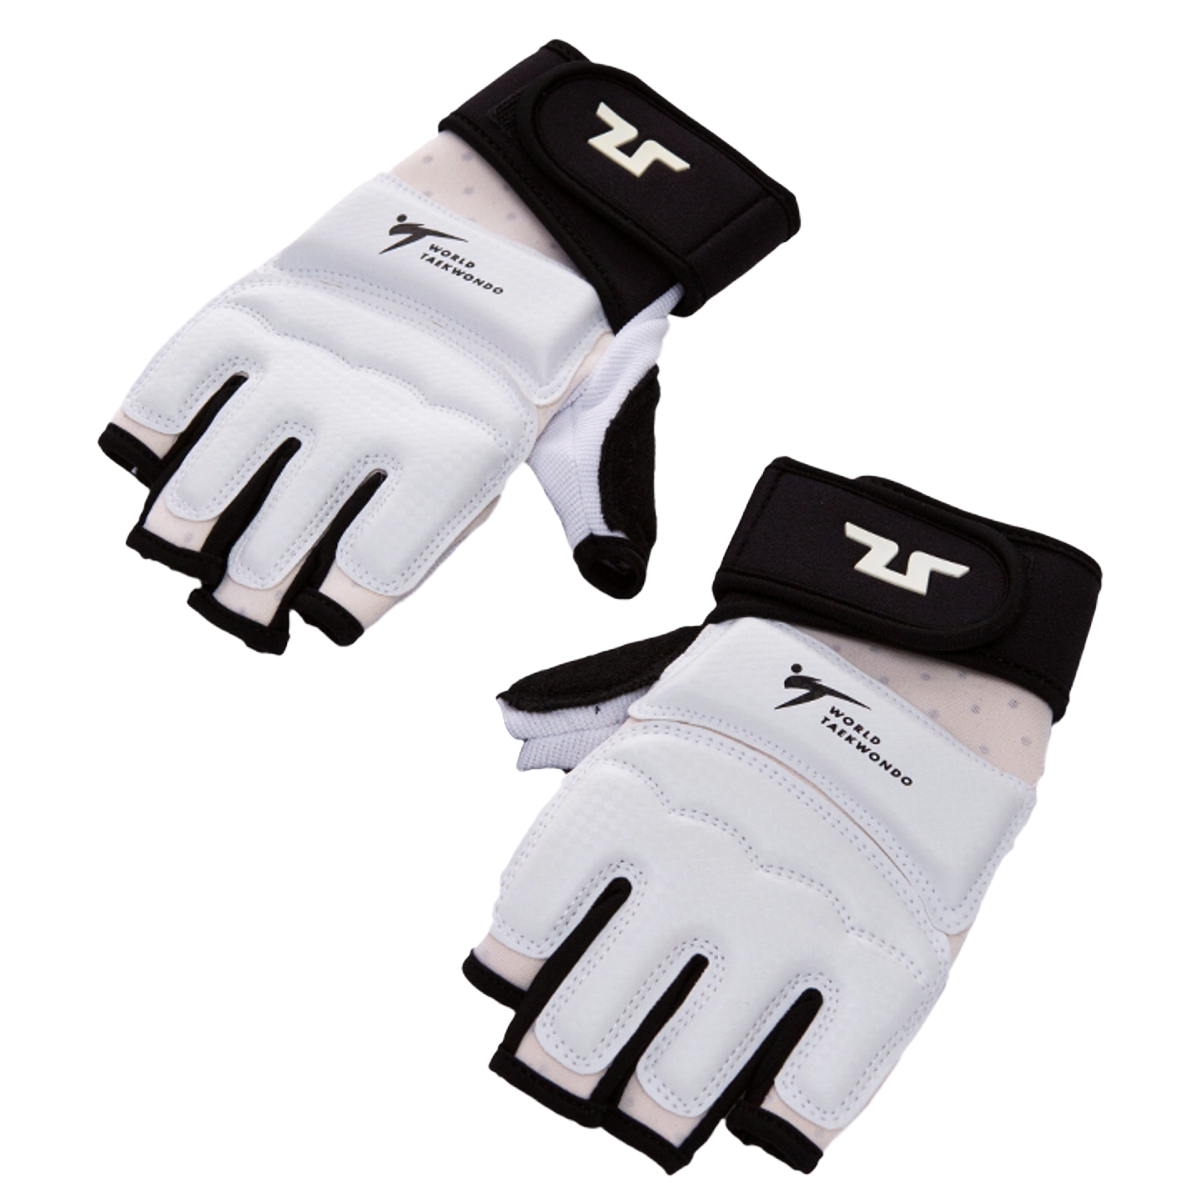 WT Approved Taekwondo Gloves